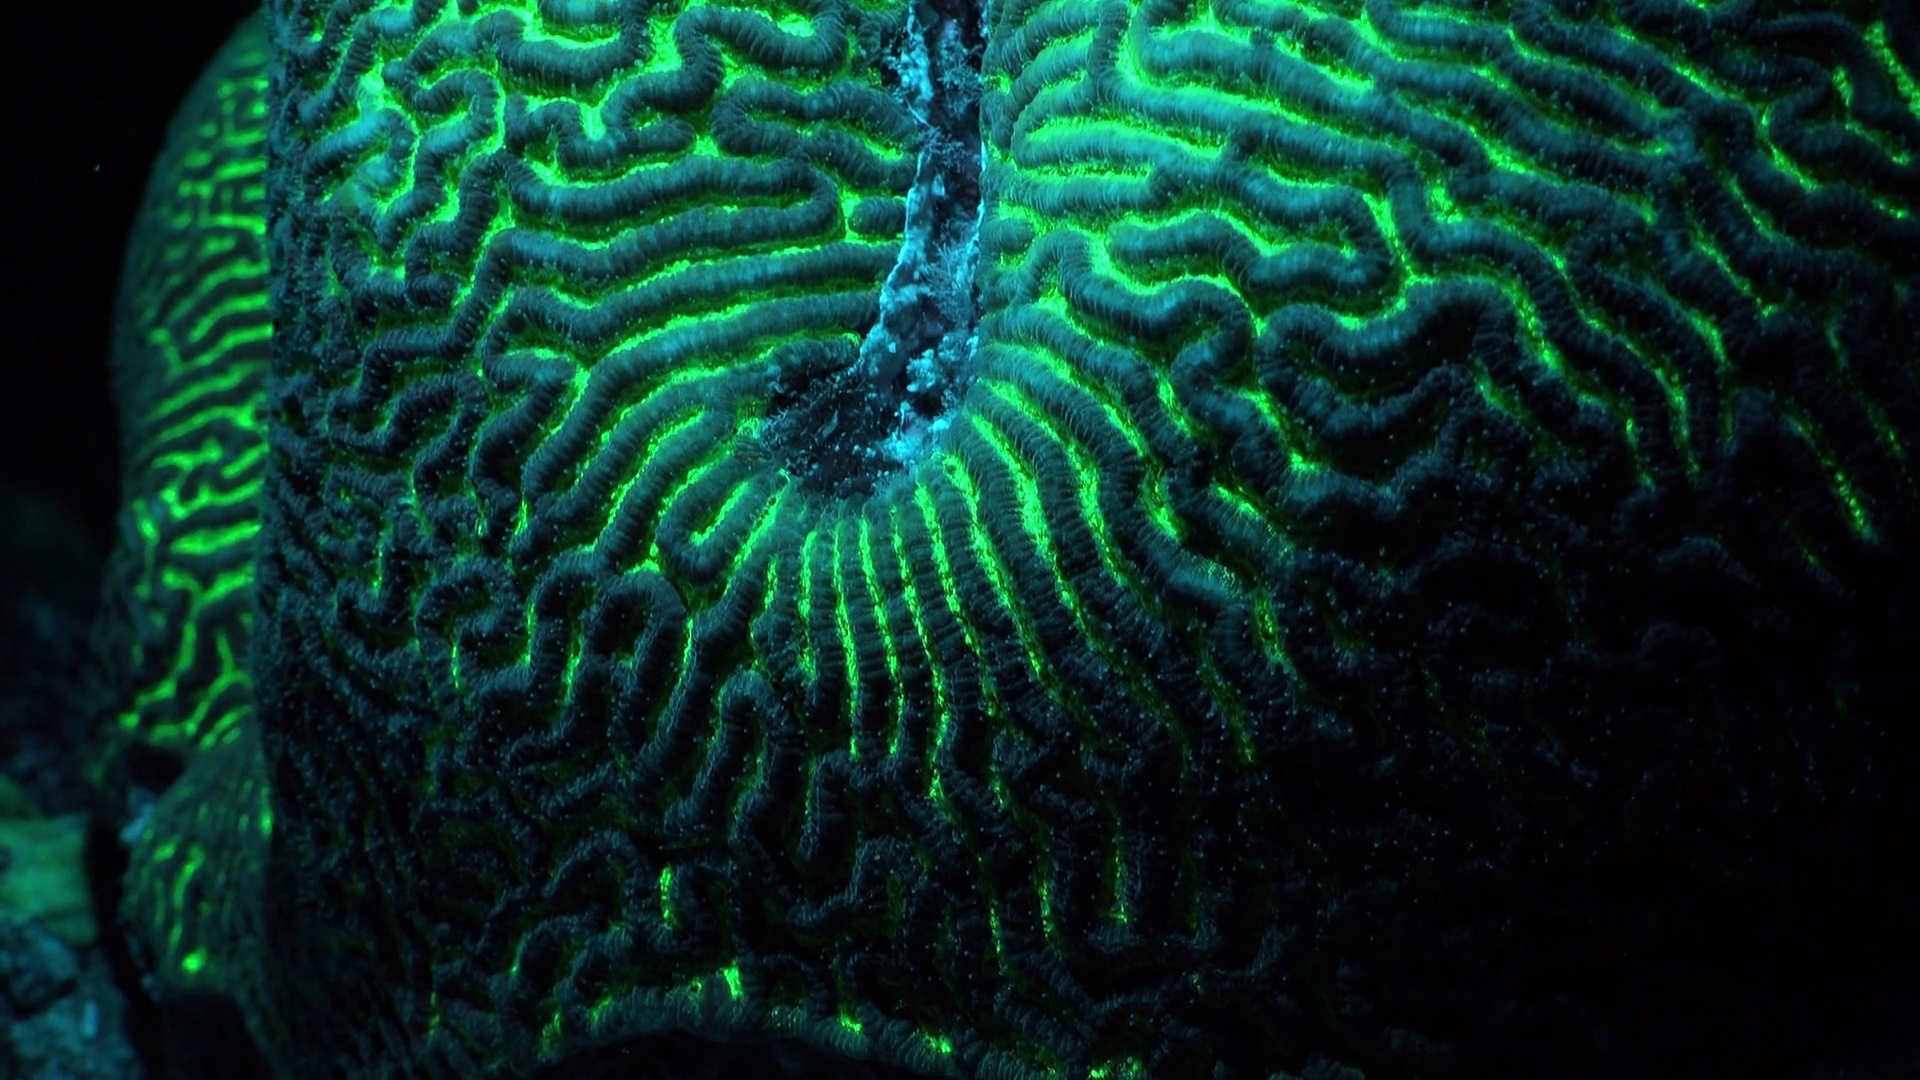 Fluorescent brain coral at night - Bioluminescence in underwater ...